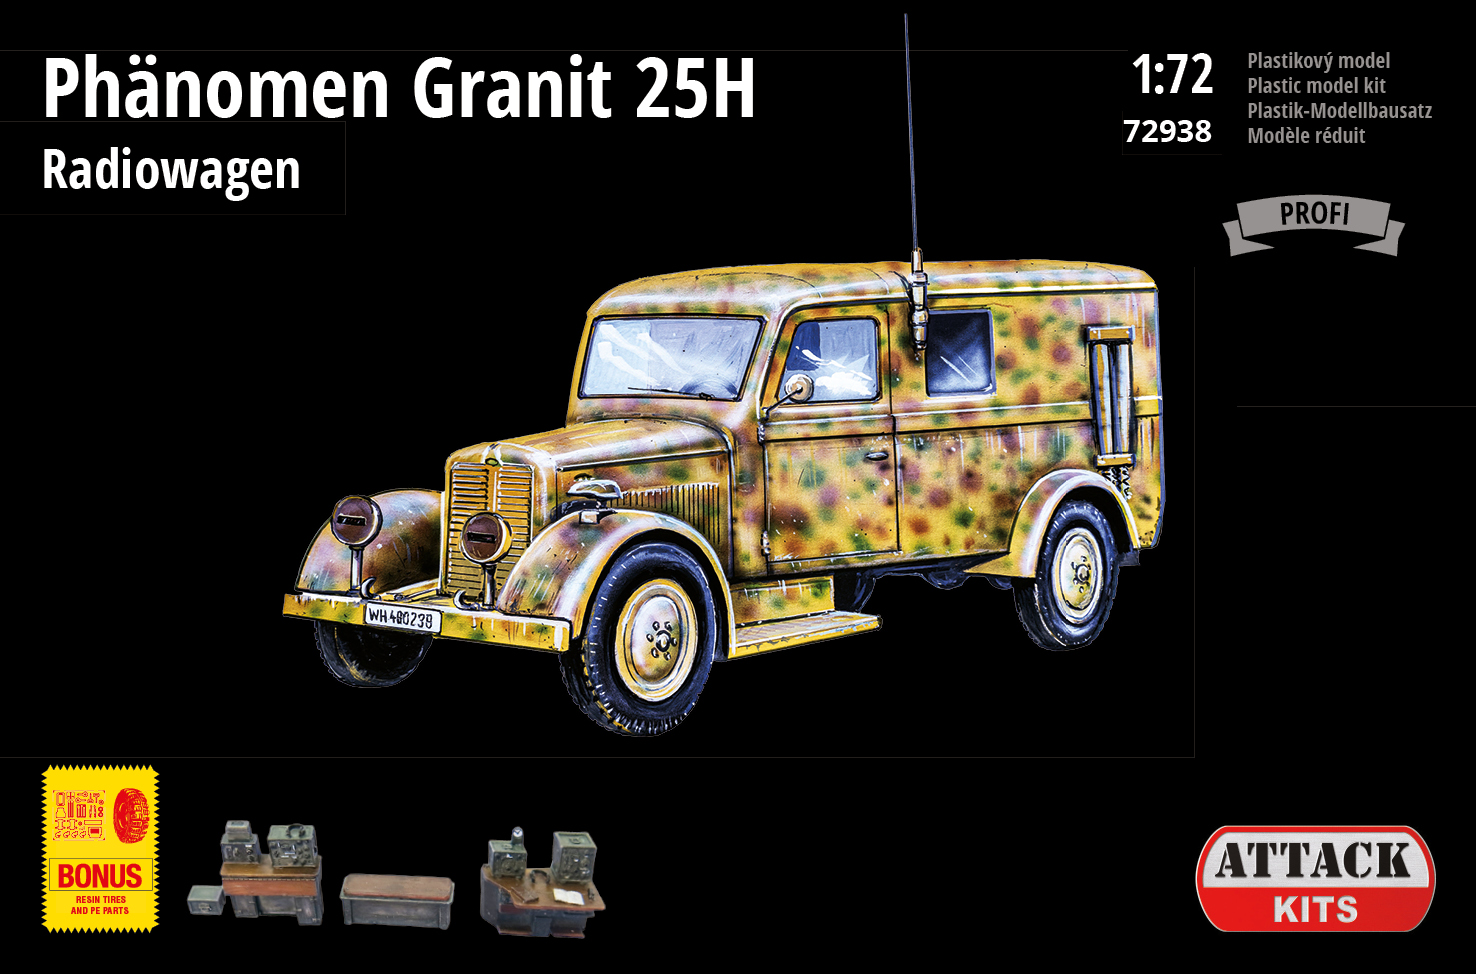 Phnomen Granit 25H Radiowagen